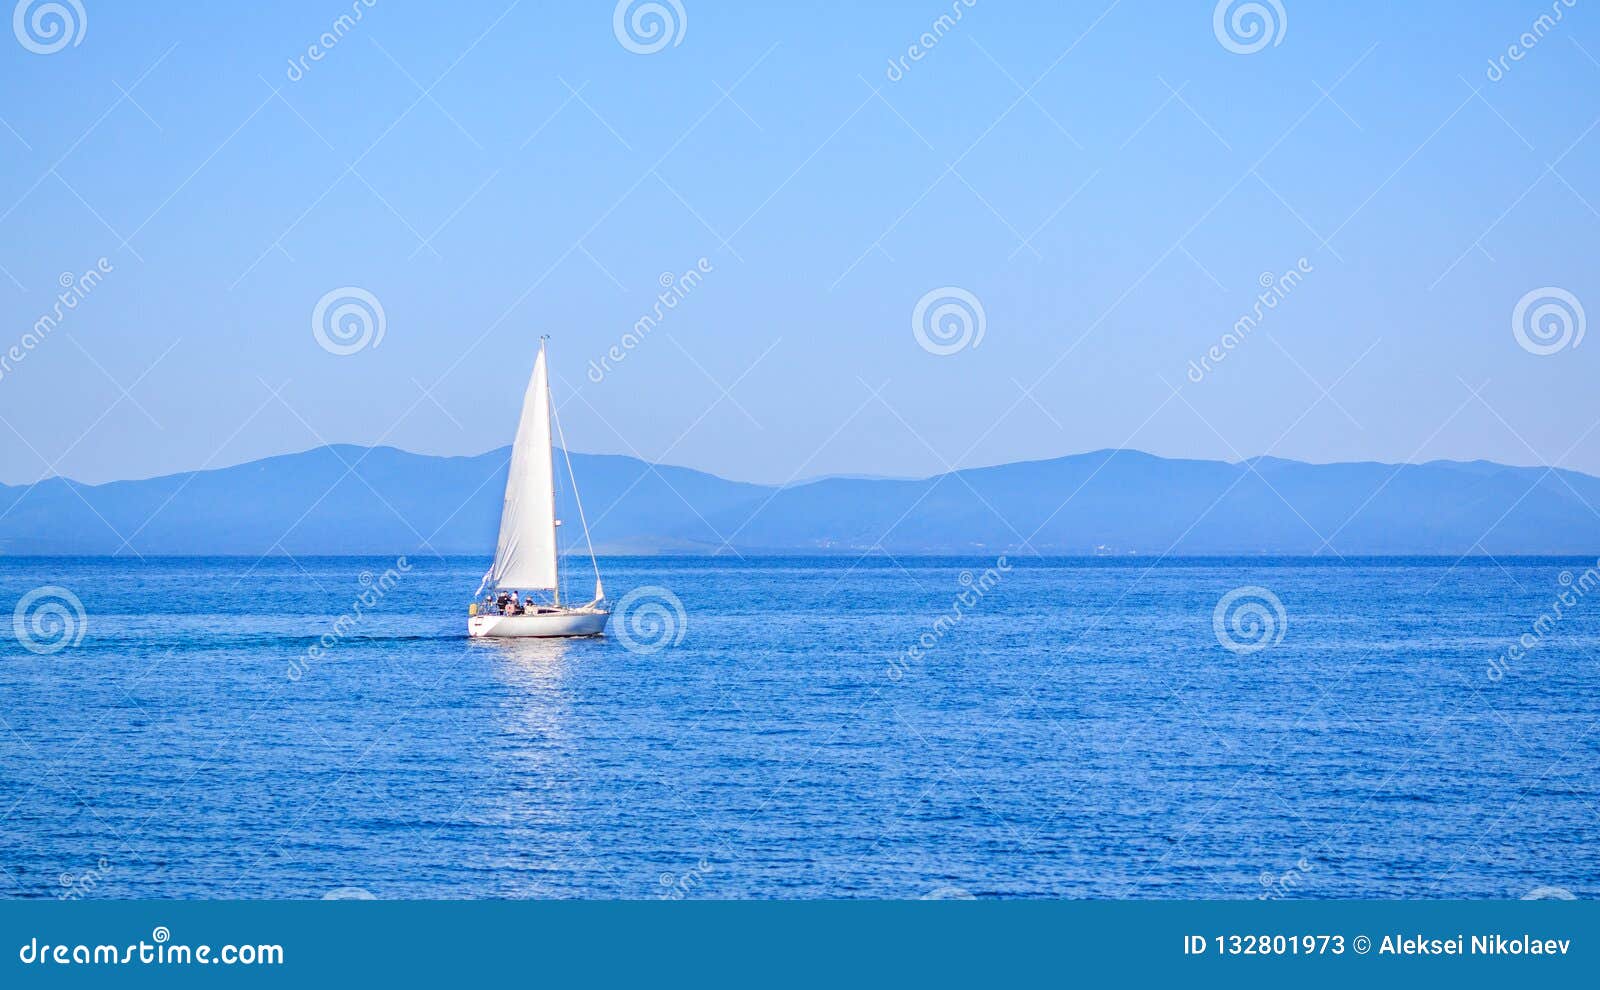 Sailboat During The International Sailing Regatta On The 